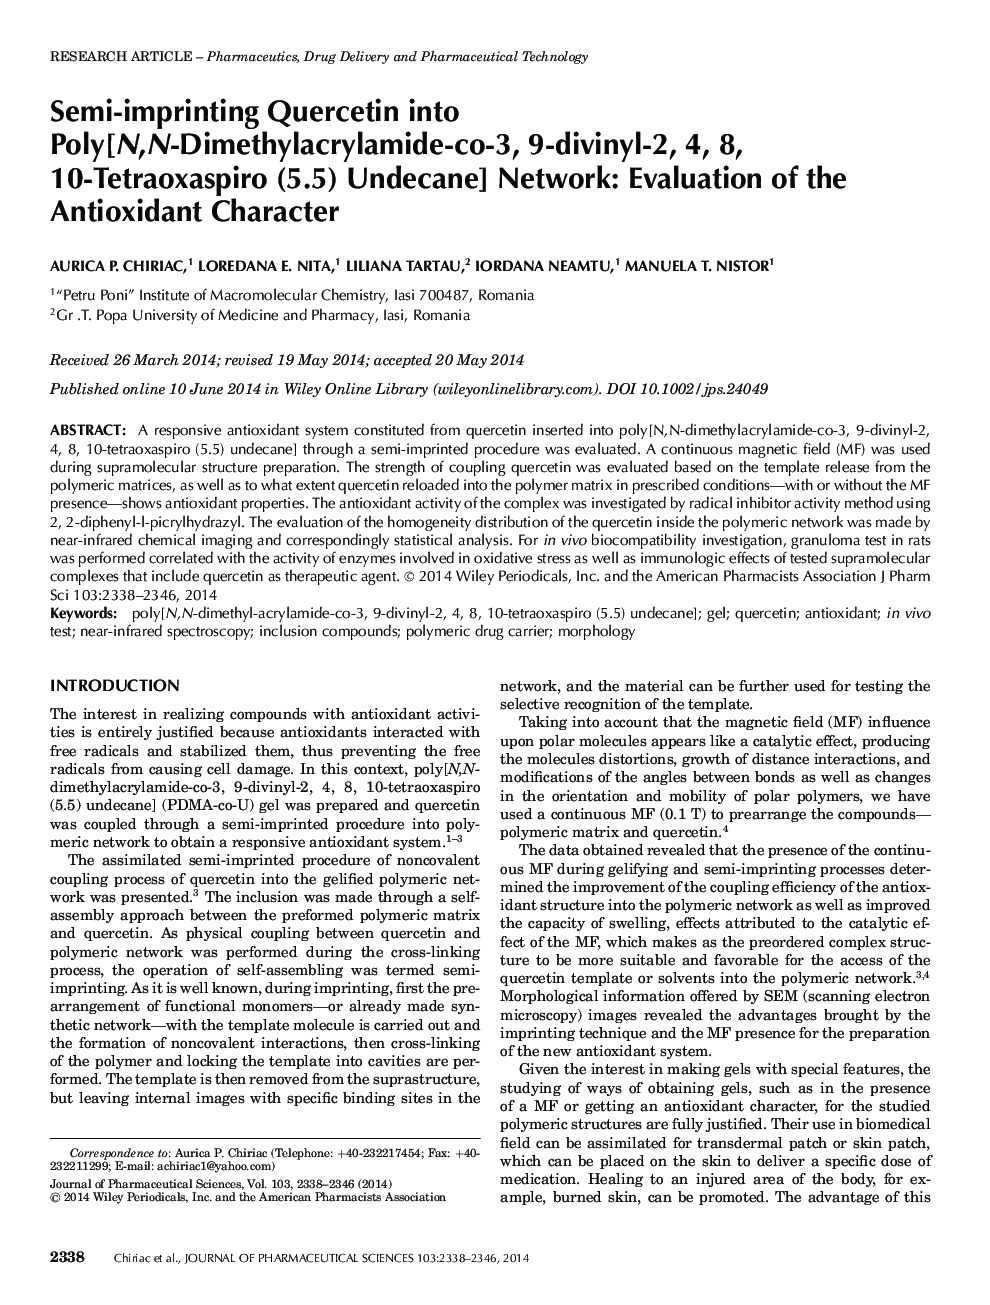 Semi-imprinting Quercetin into Poly[N,N-Dimethylacrylamide-co-3, 9-divinyl-2, 4, 8, 10-Tetraoxaspiro (5.5) Undecane] Network: Evaluation of the Antioxidant Character